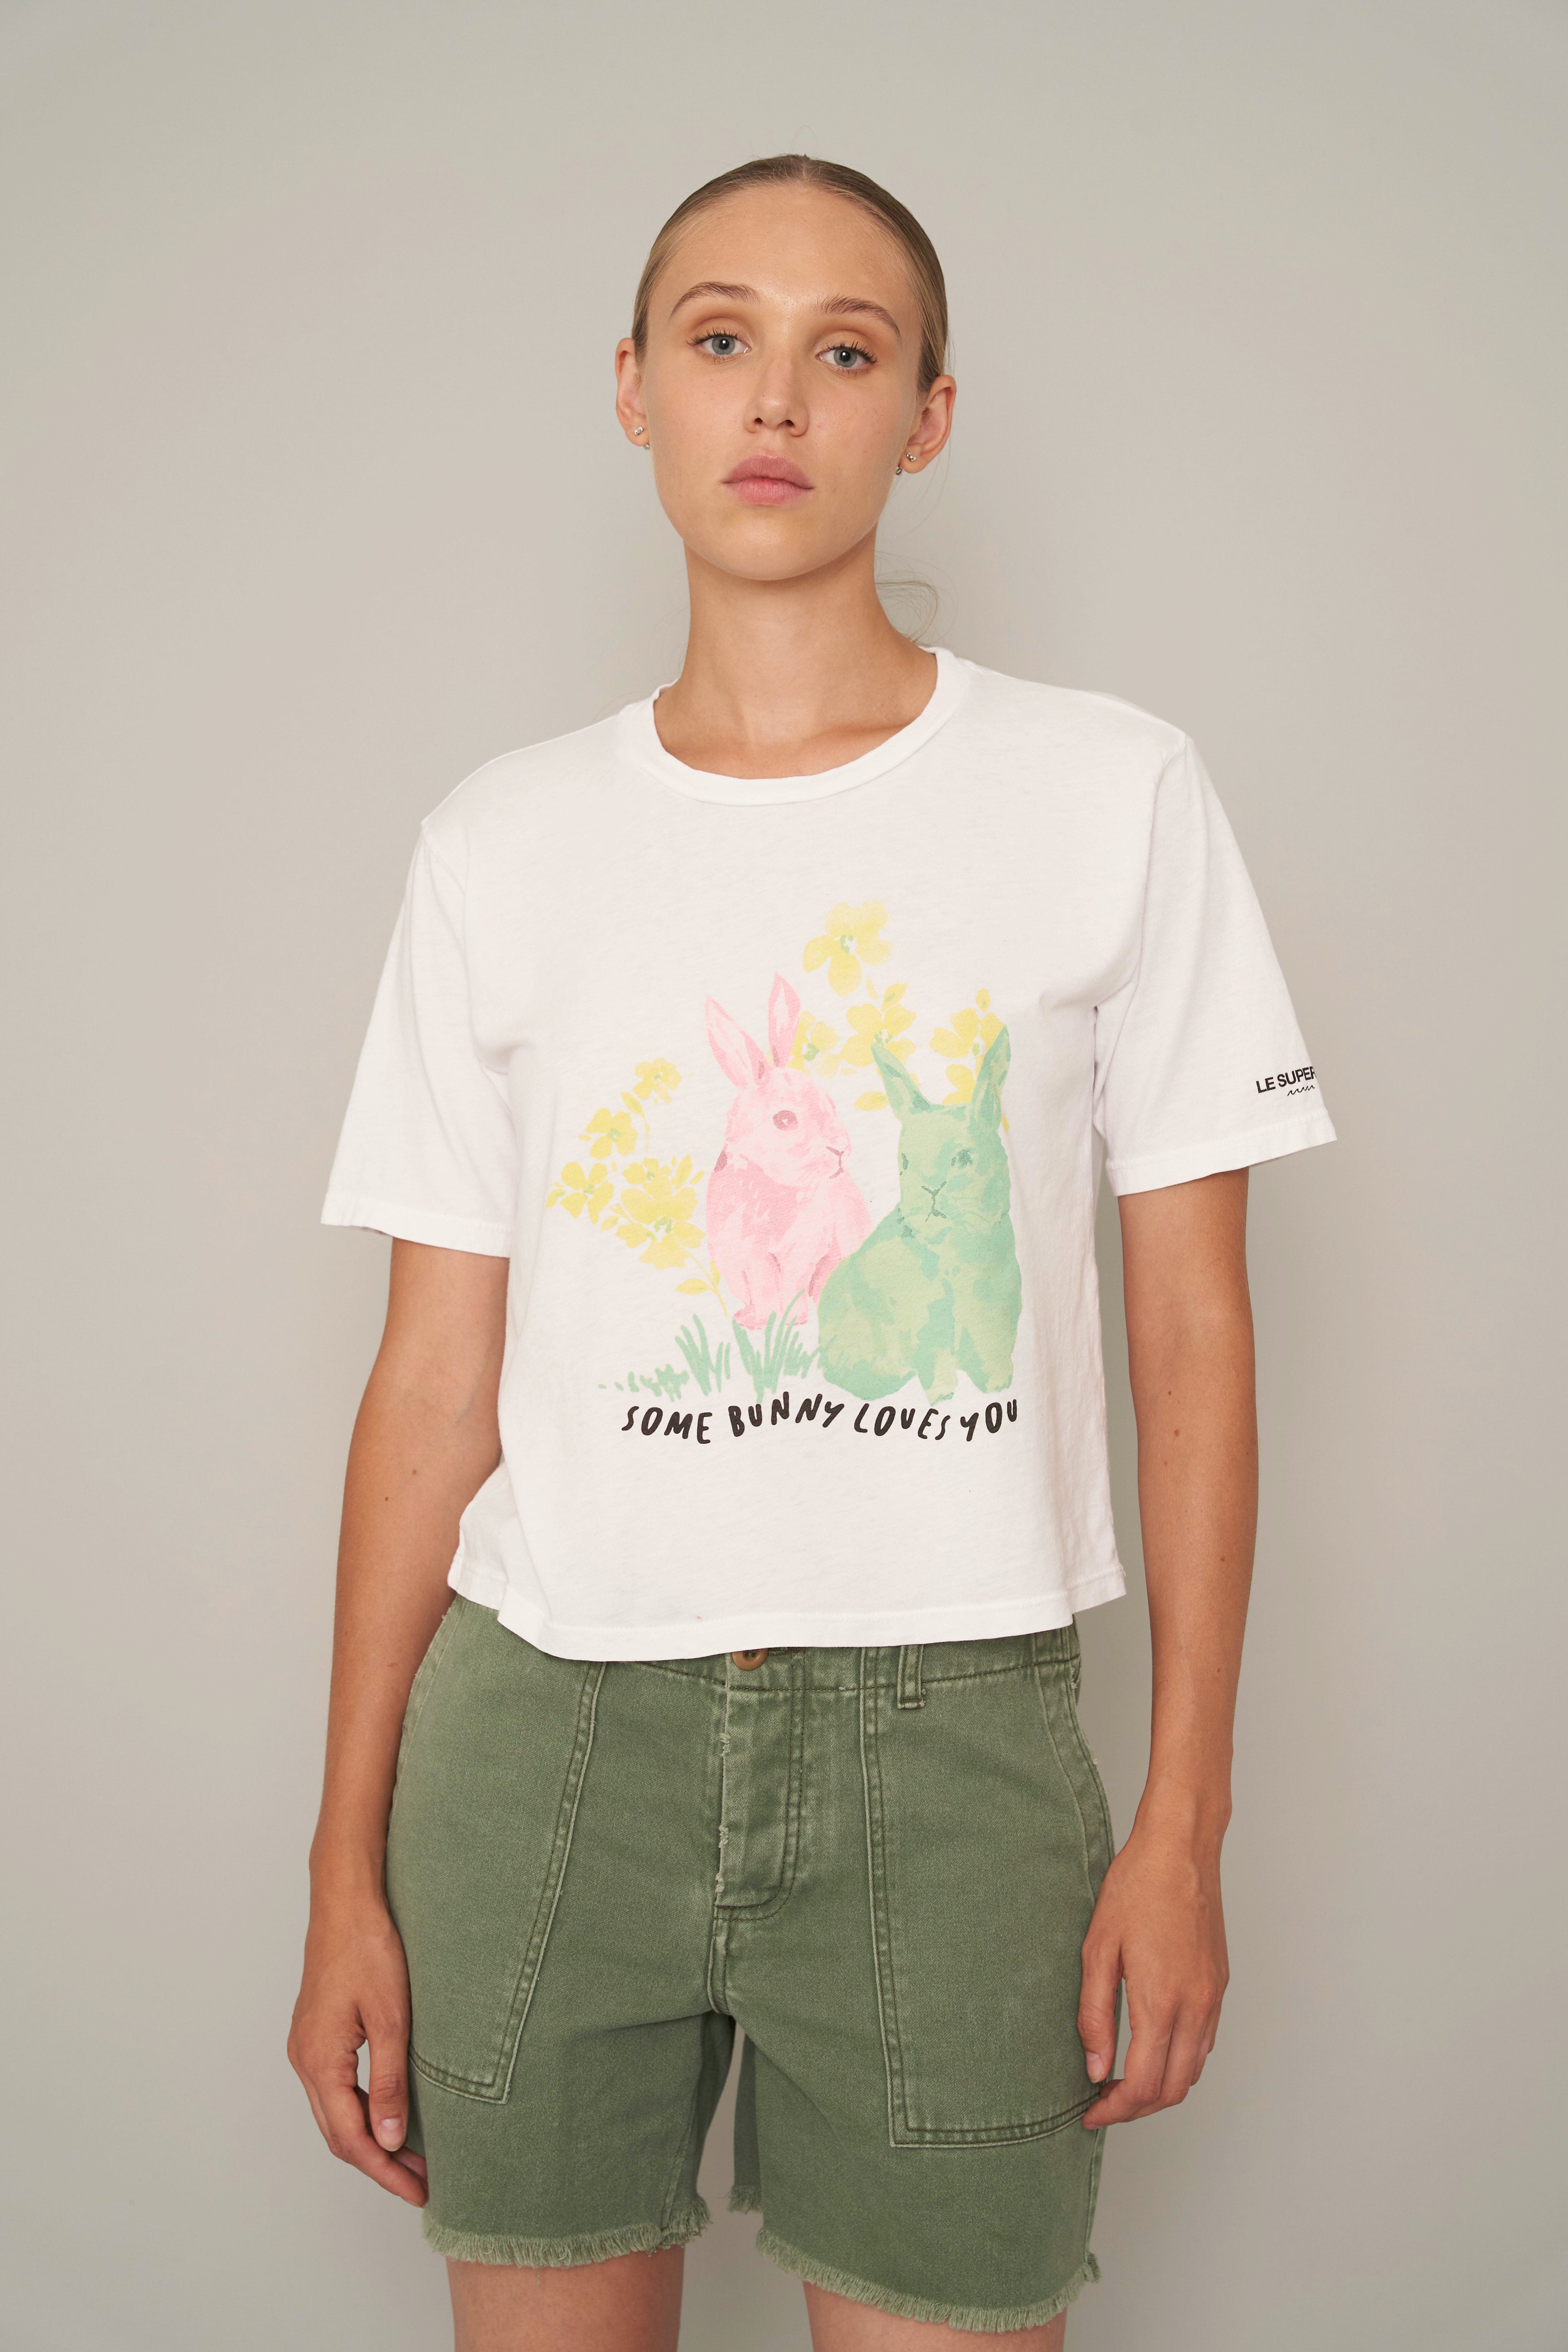 Camiseta Un conejito te ama